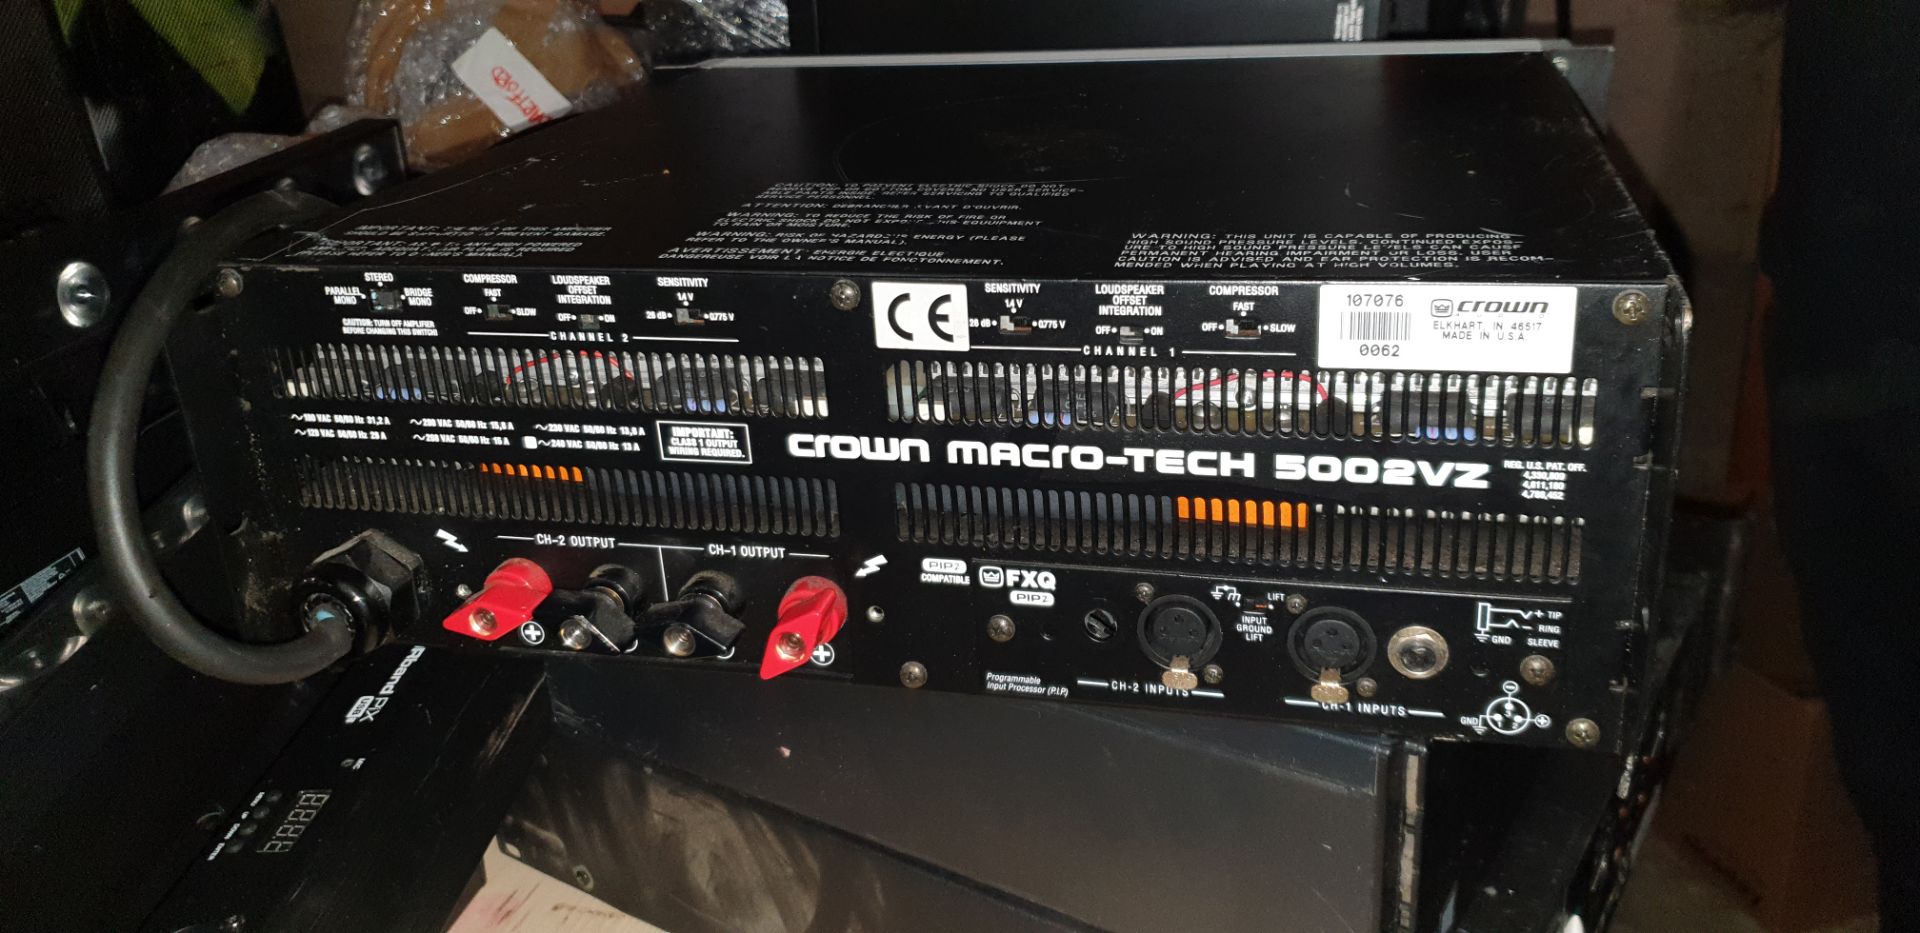 1 ; Crown Macro-Tech 5002 VZ Power Amplifier - Image 2 of 2